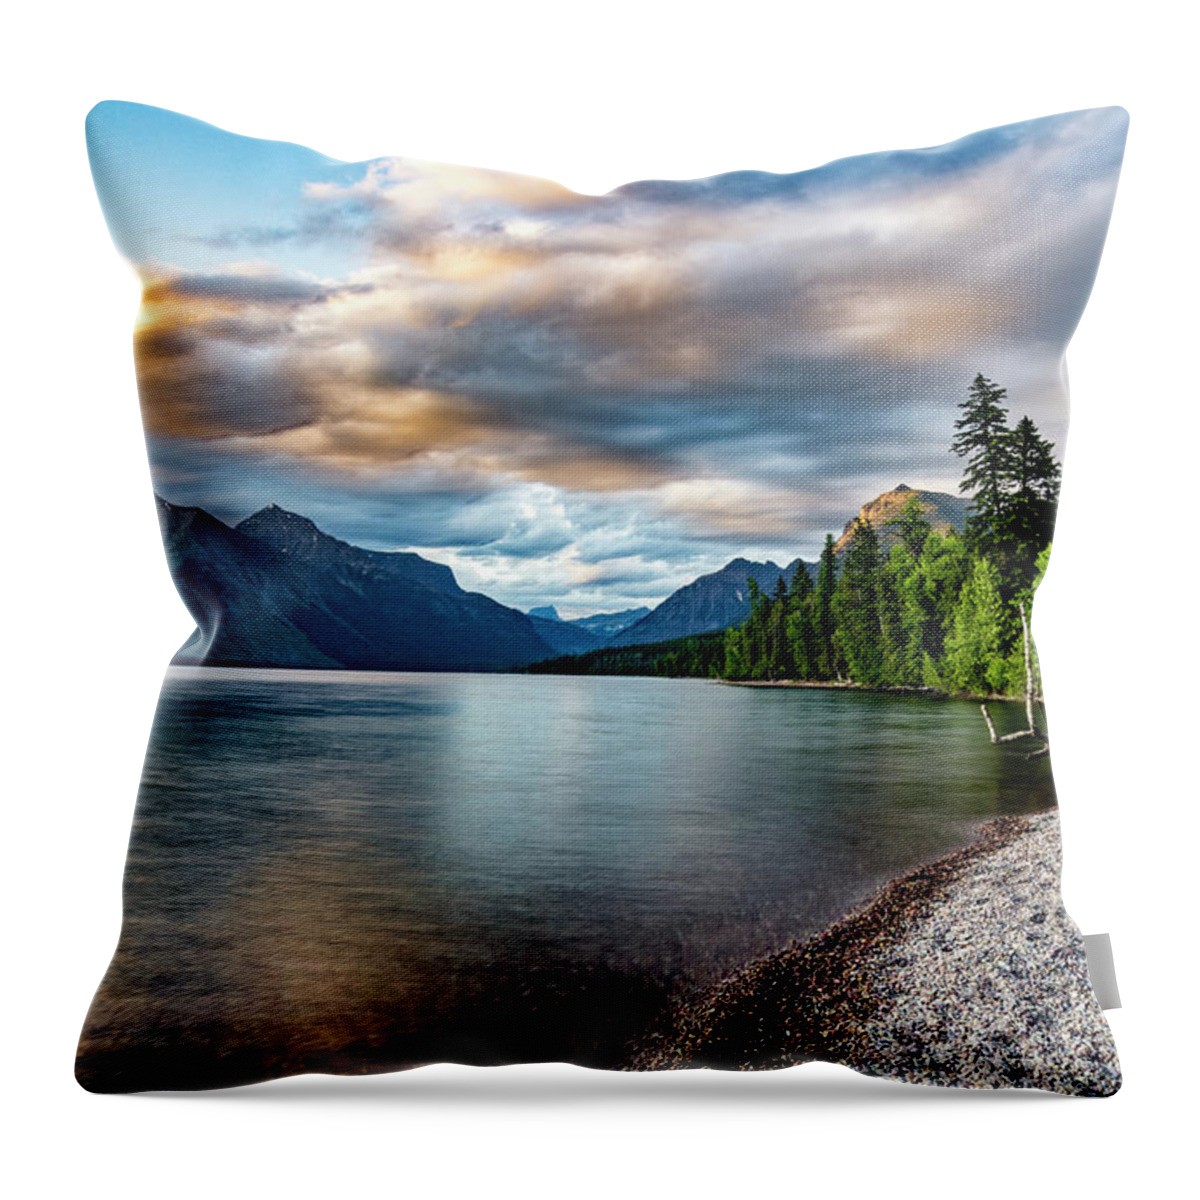 Glacier National Park Throw Pillow featuring the photograph Lake McDonald Glacier National Park #1 by Donald Pash